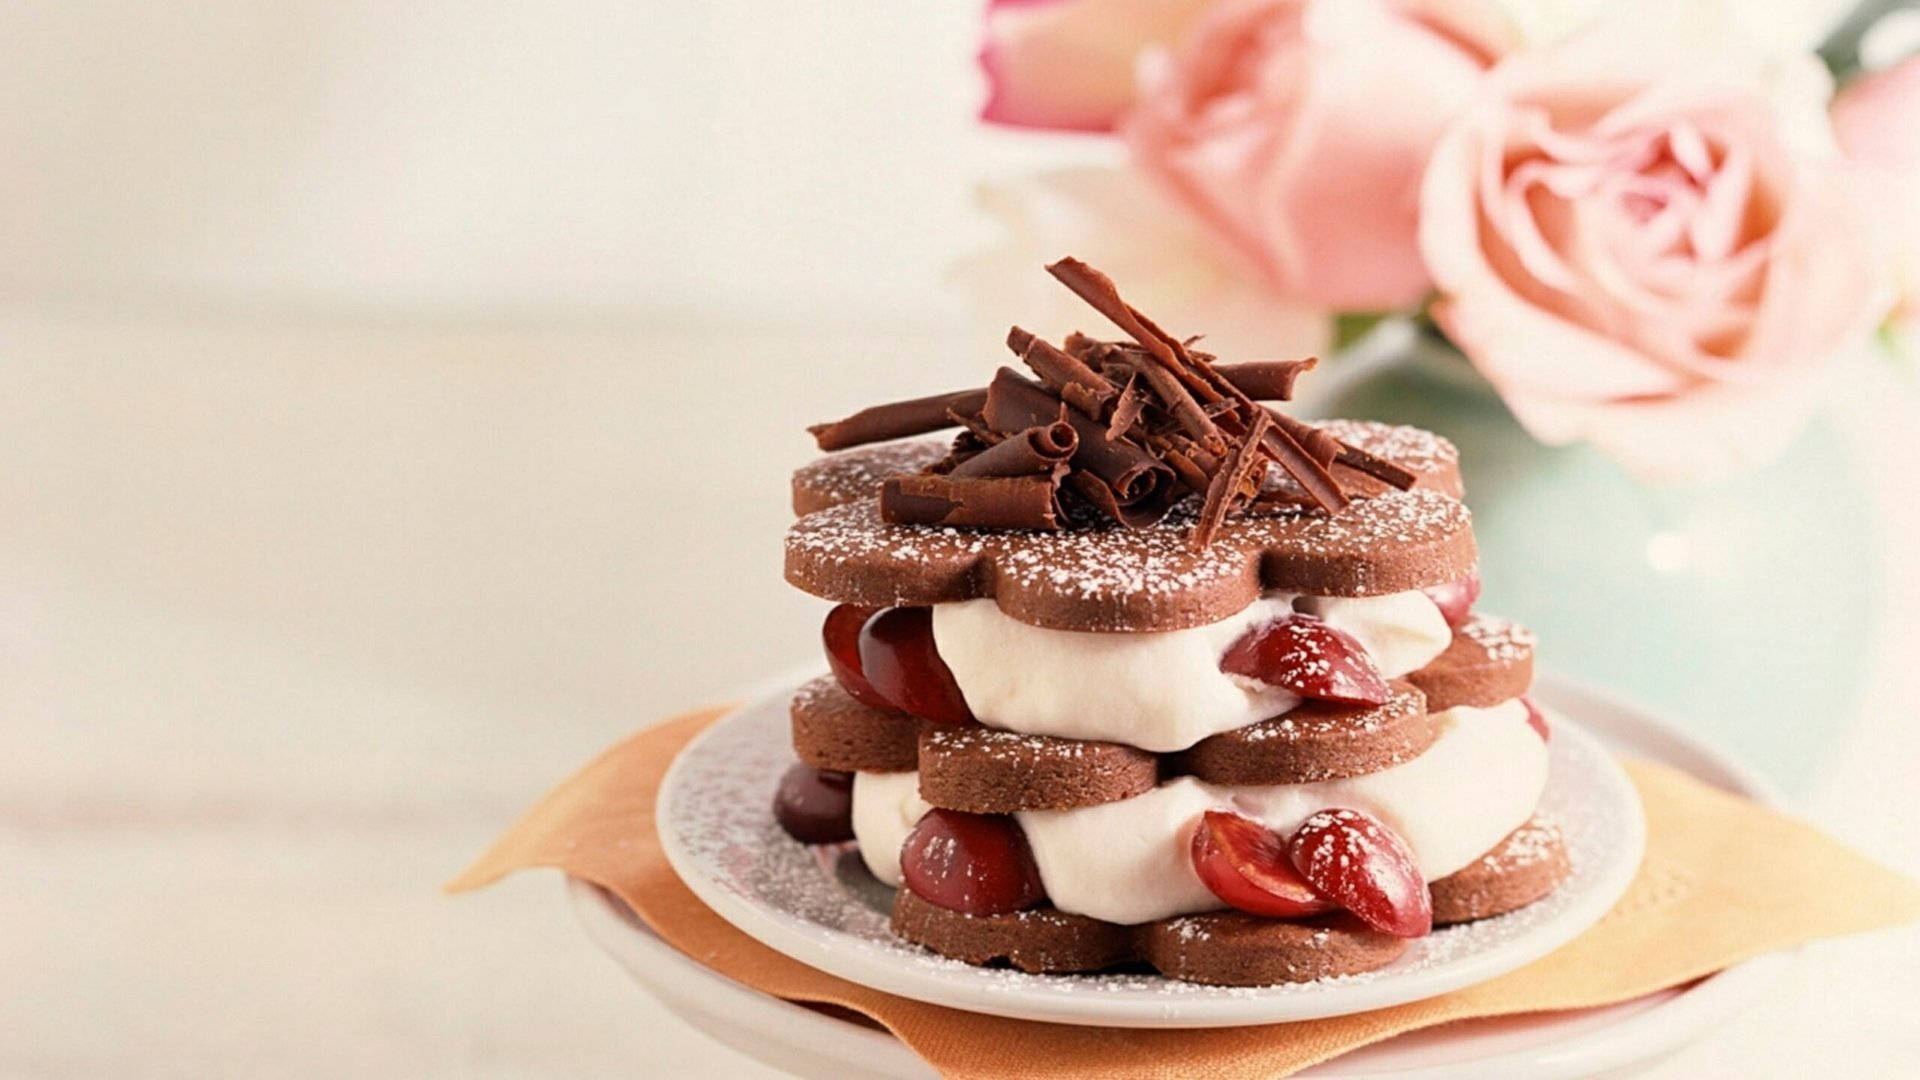 Vanilla Chocolate Pancake Dessert Wallpaper